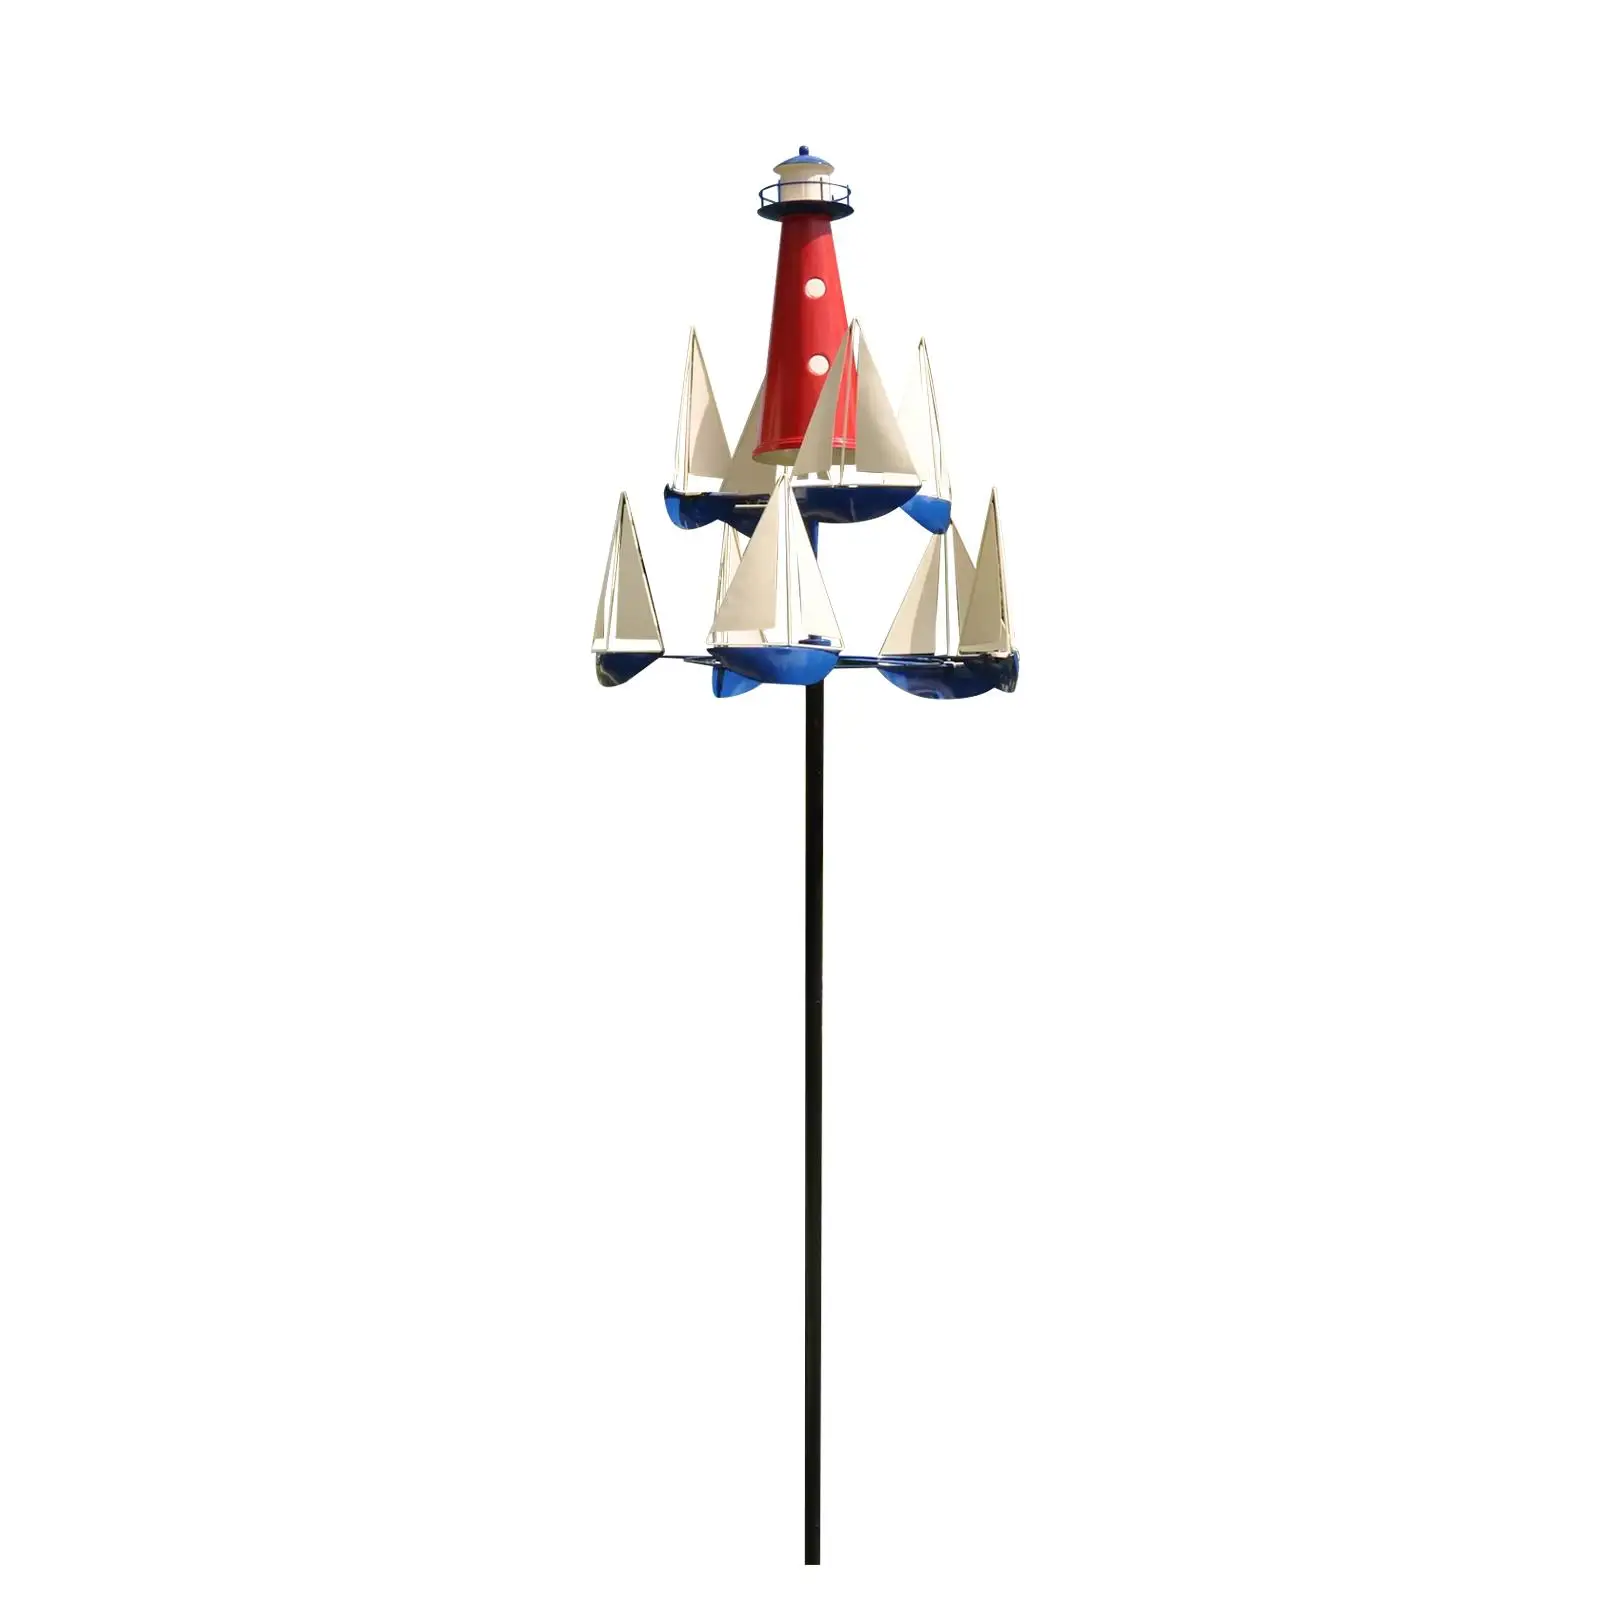 Unique Sailboat Windmill Decorations Decorative Summer Lighthouse Wind Catcher Nautical Wind Sculpture Yard Decor for Patio Yard